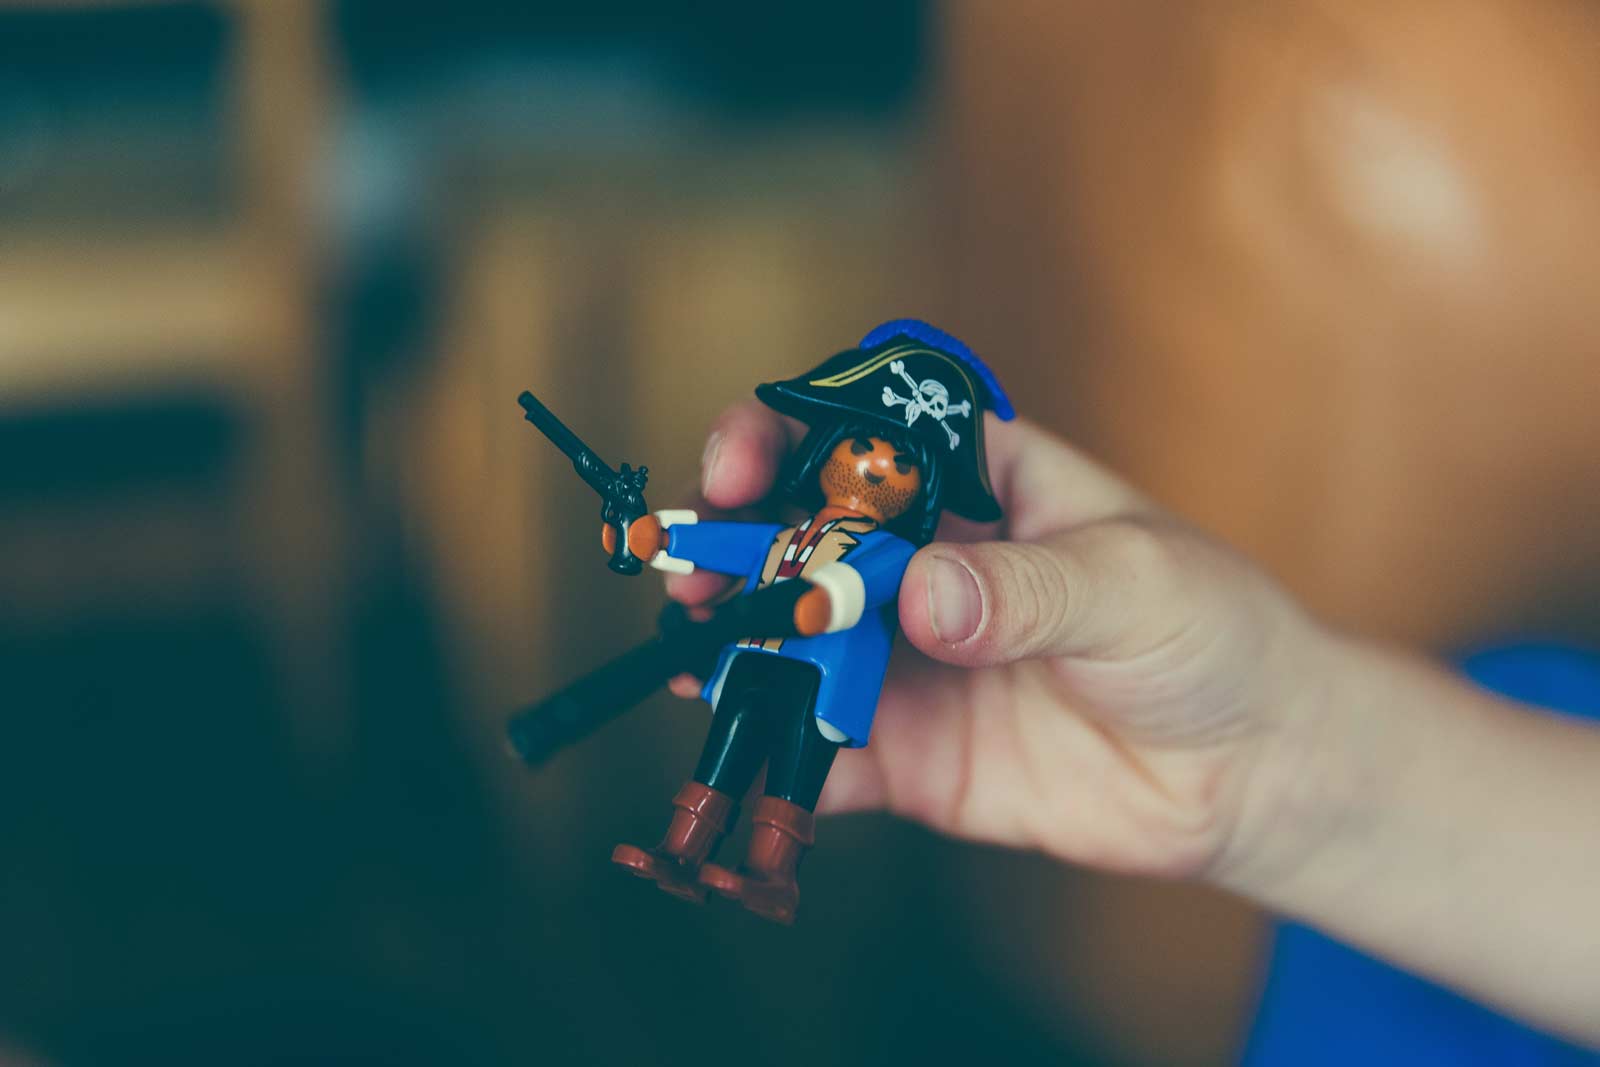 Lego Pirate